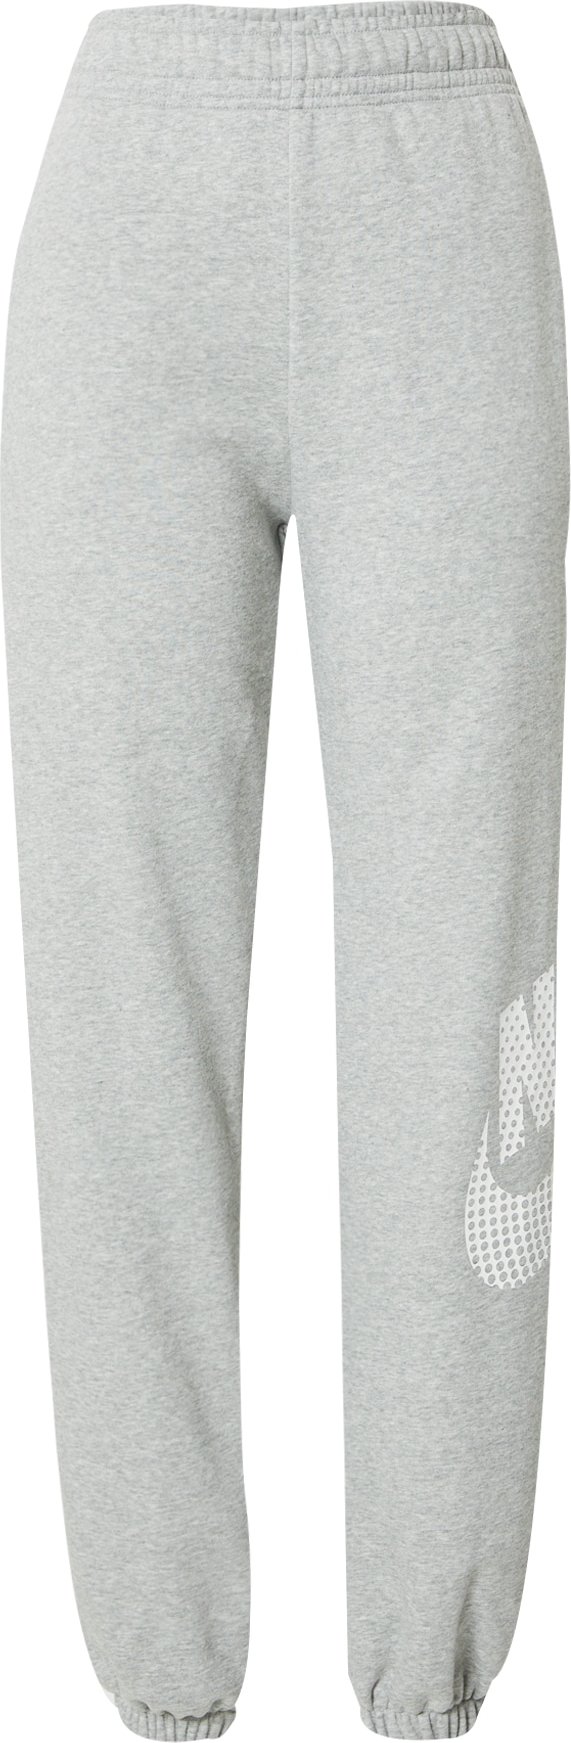 Kalhoty 'Emea' Nike Sportswear šedý melír / bílá